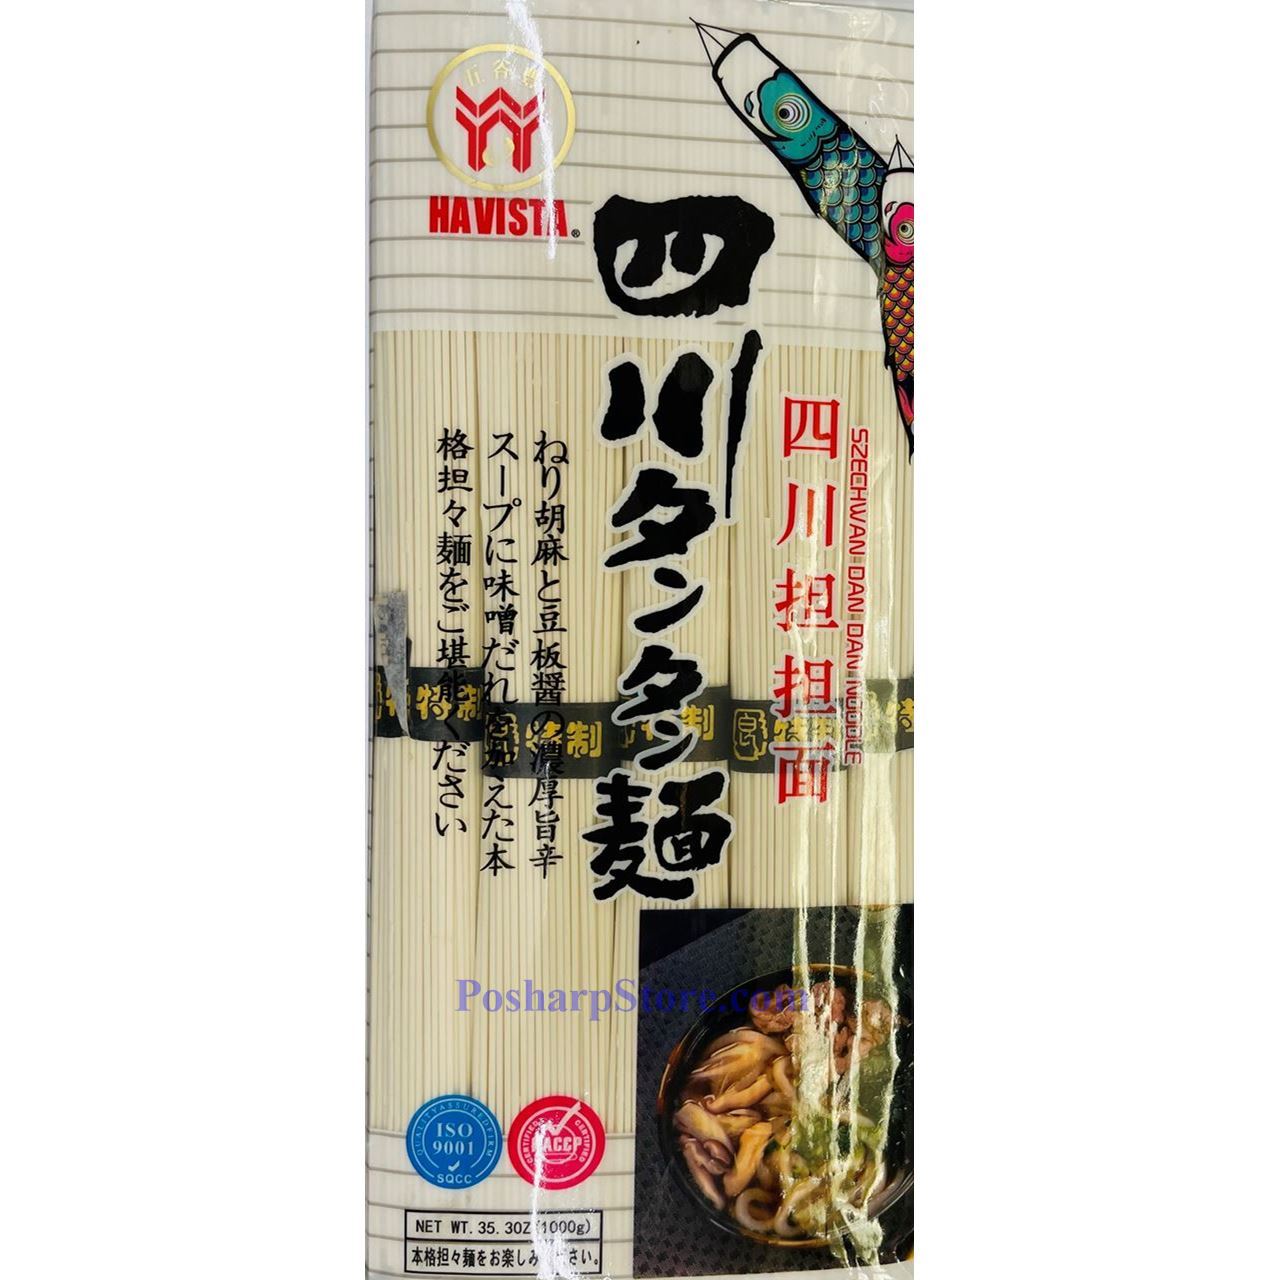 0016543_havista-sichuan-dandan-noodles-353-oz_0t02.jpg